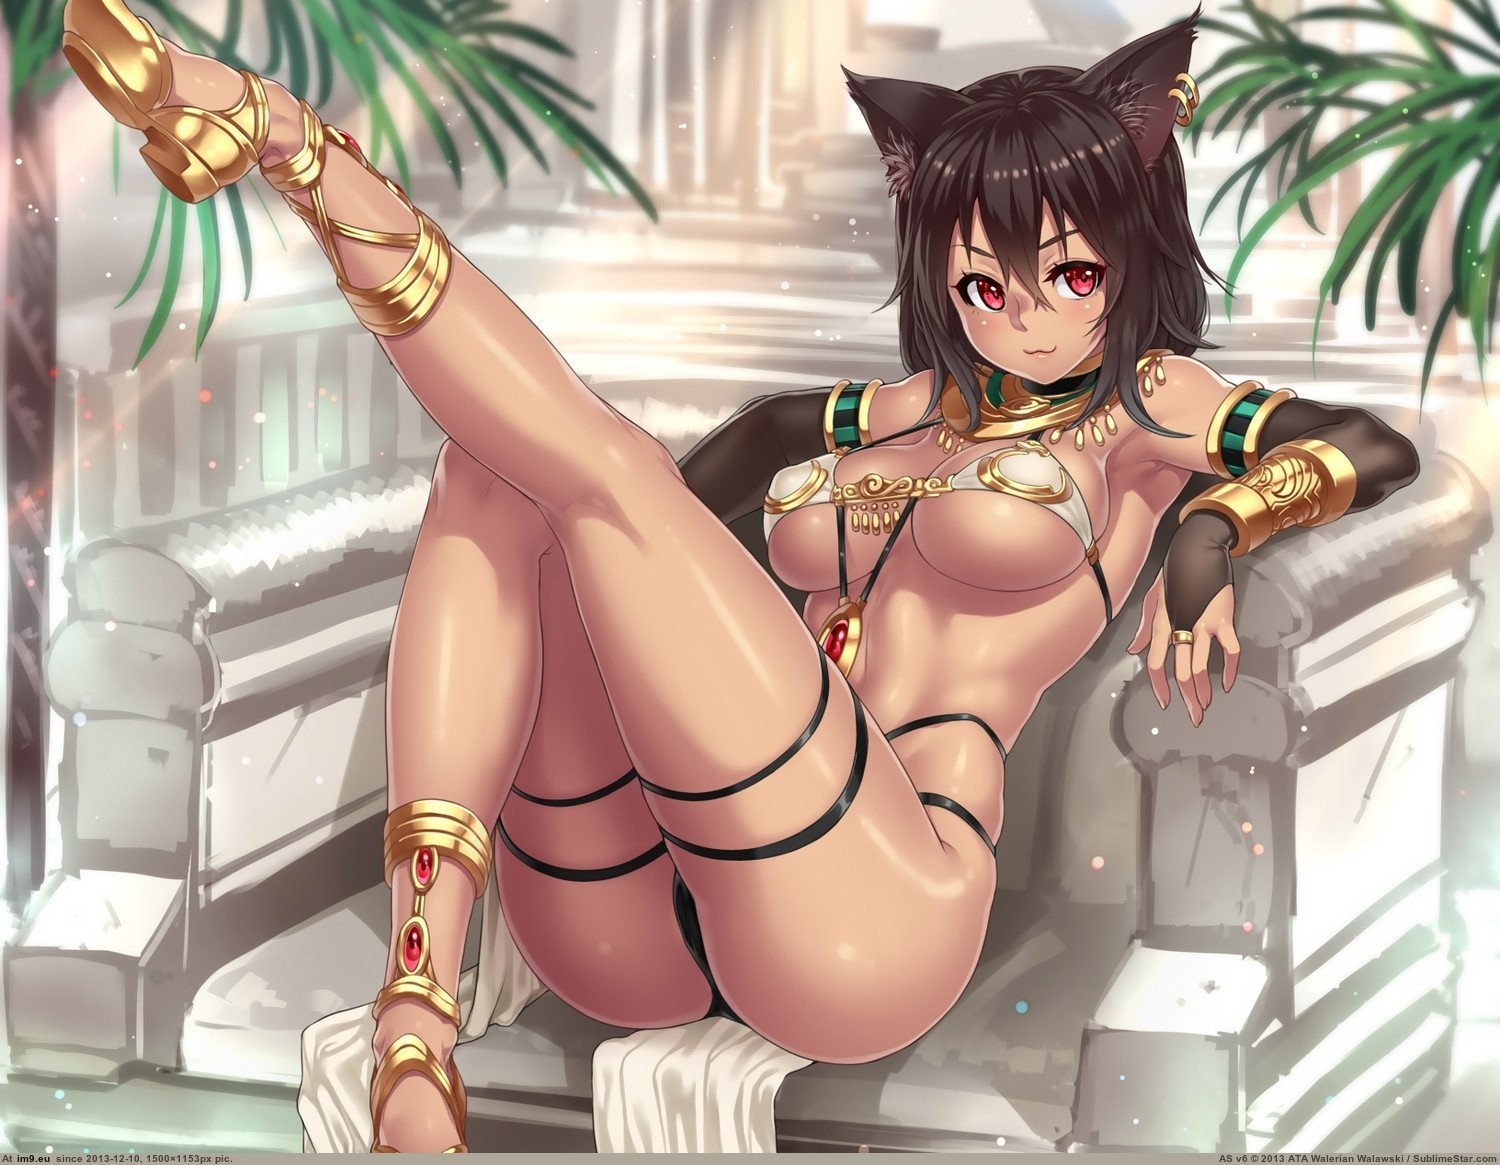 Anubis cat girl has a sex pair of legs